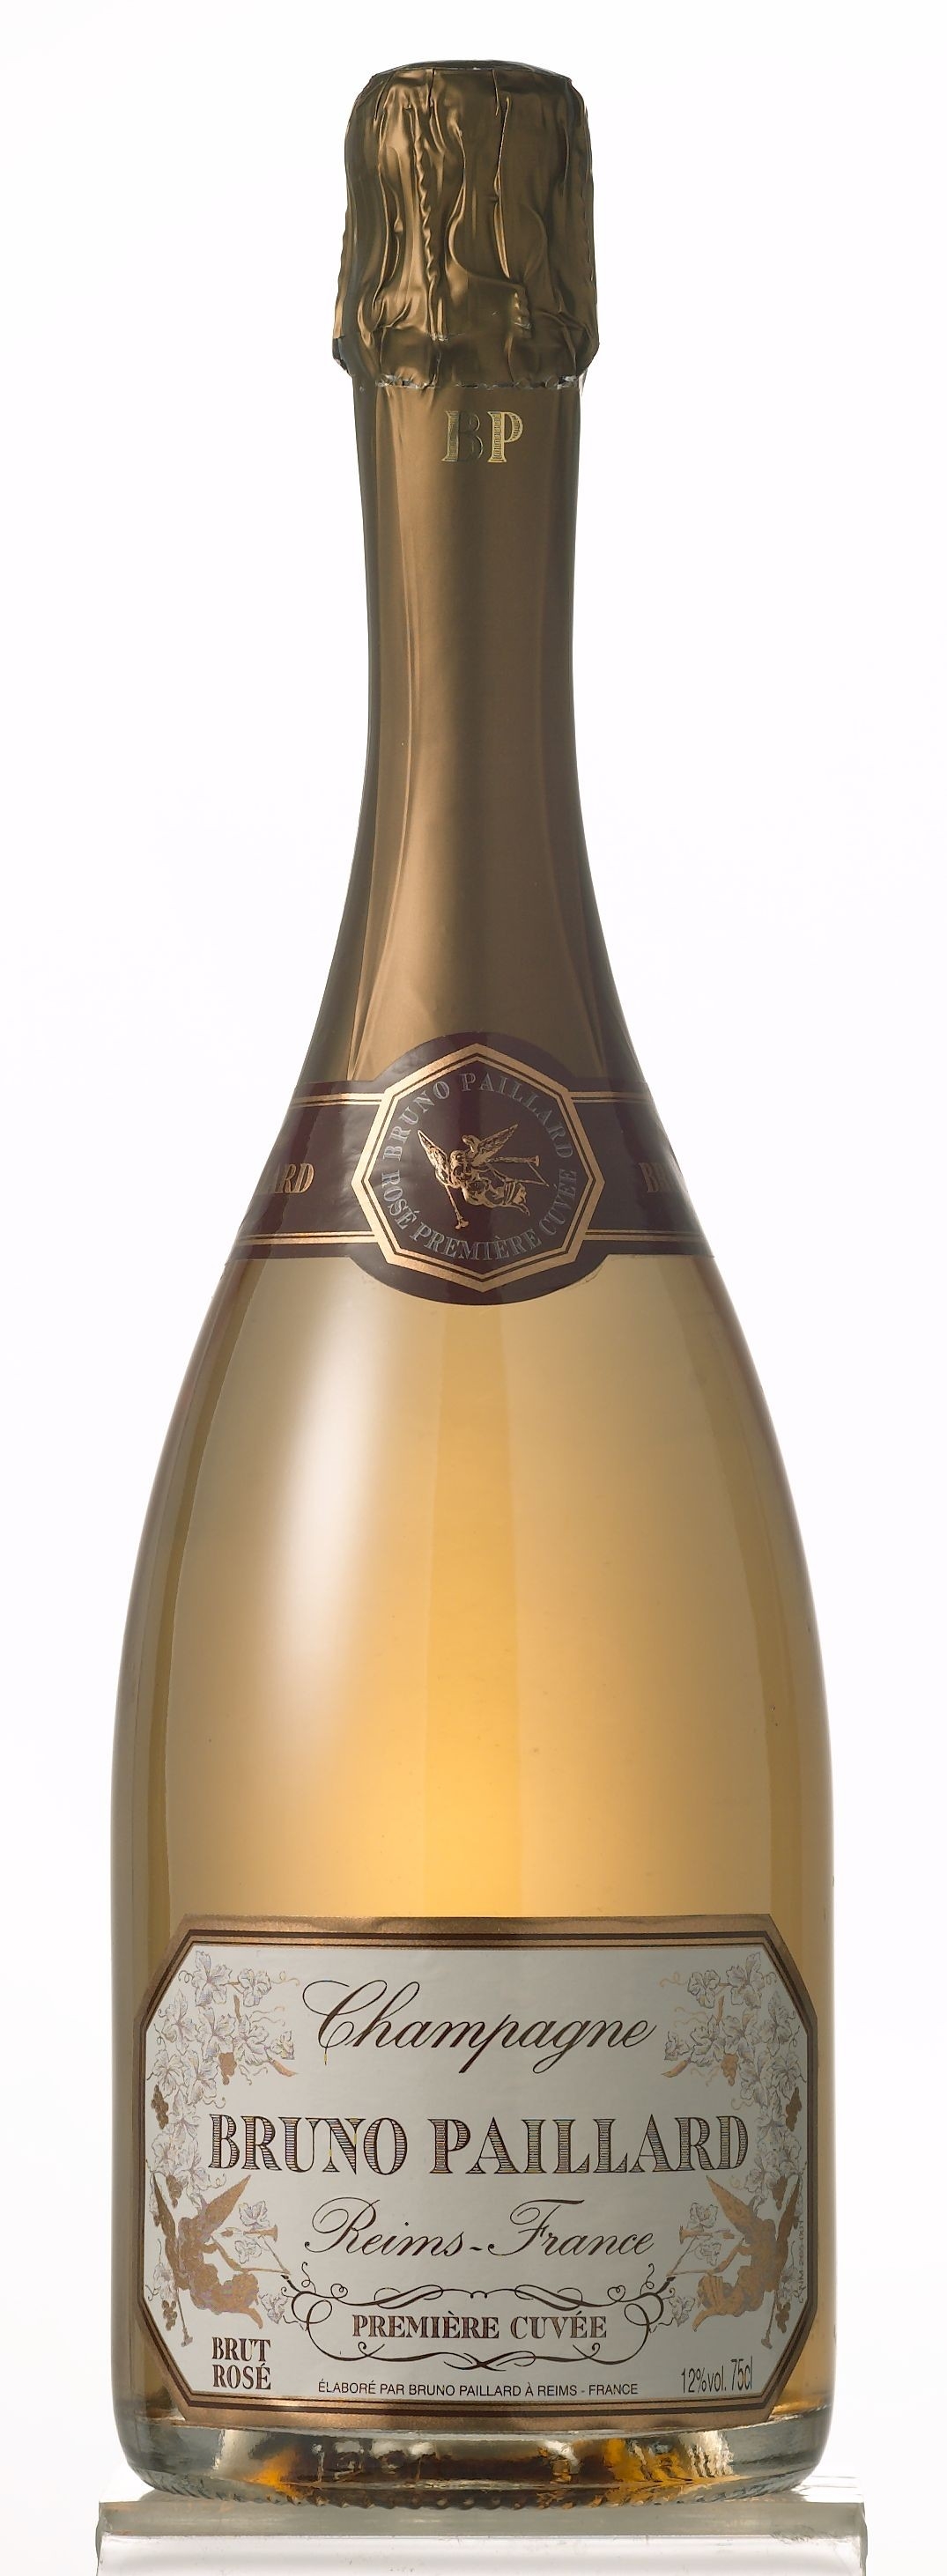 Champagner Bruno Paillard rosé